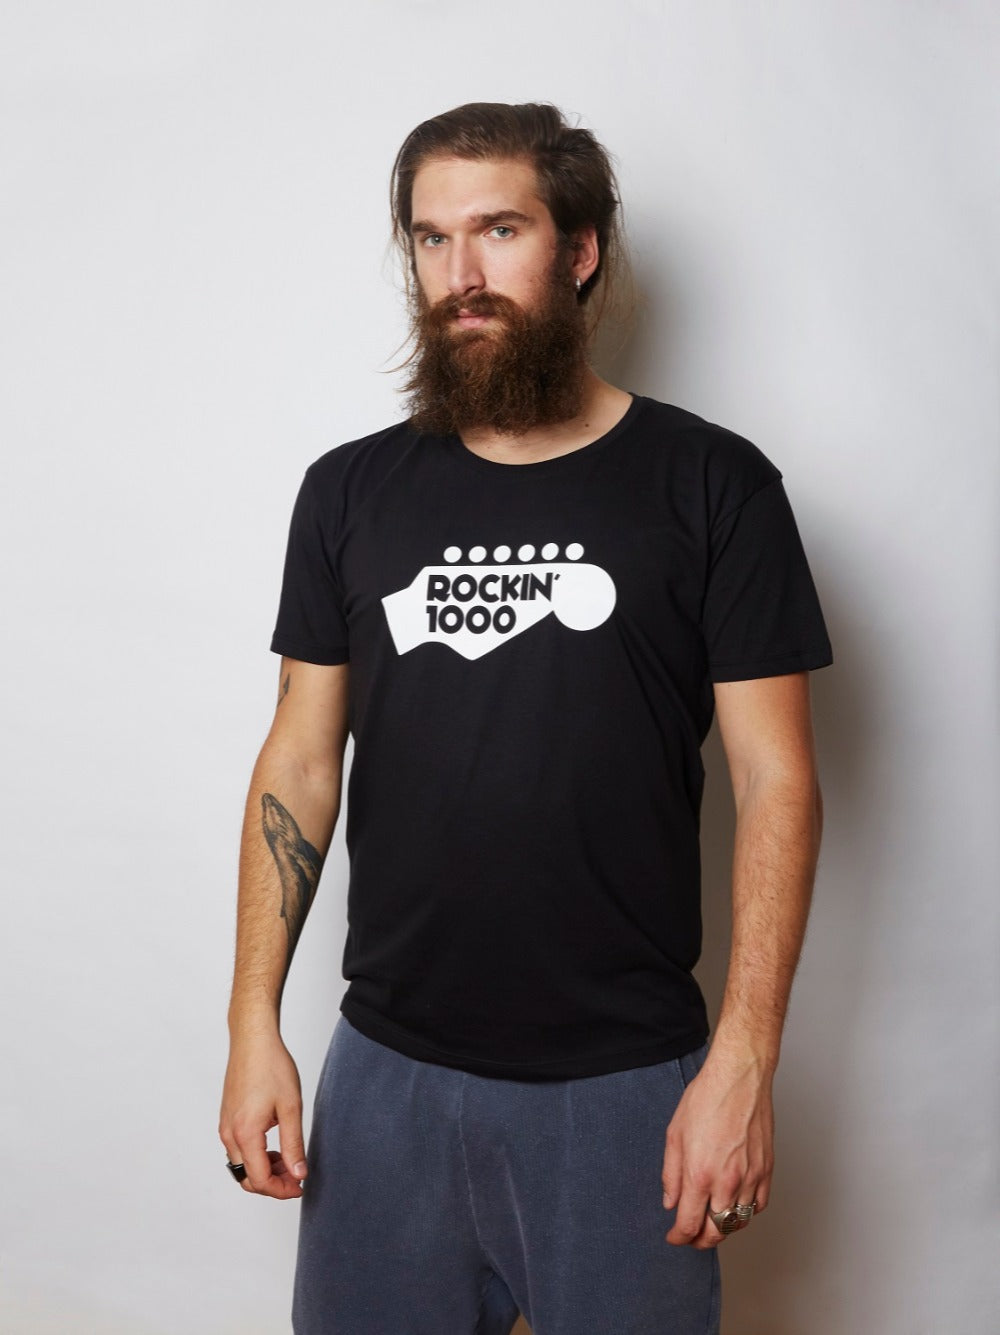 Rockin'1000 Logo Black T-Shirt Man